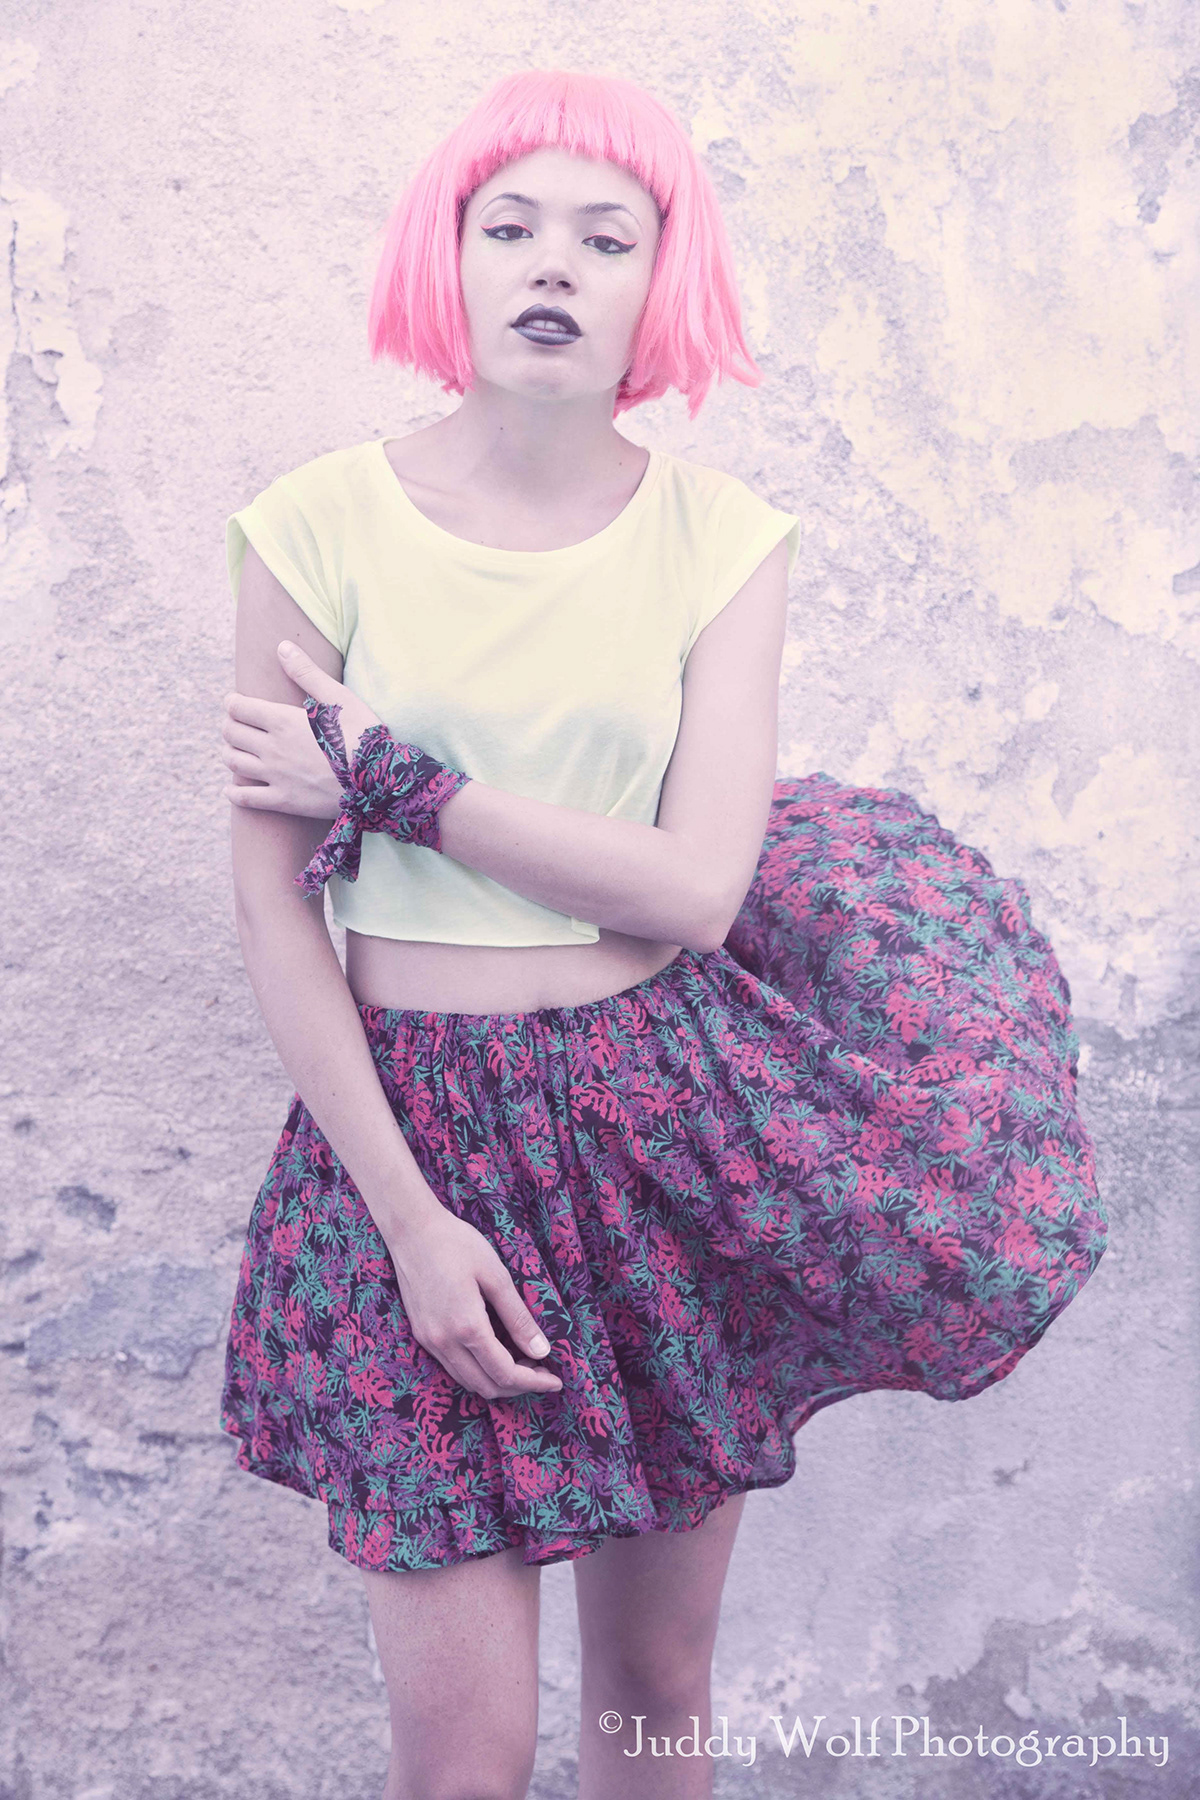 pink wig In Your Face Project wierd portrait people girl model anna grenat Beautiful Style Yolandi skirt